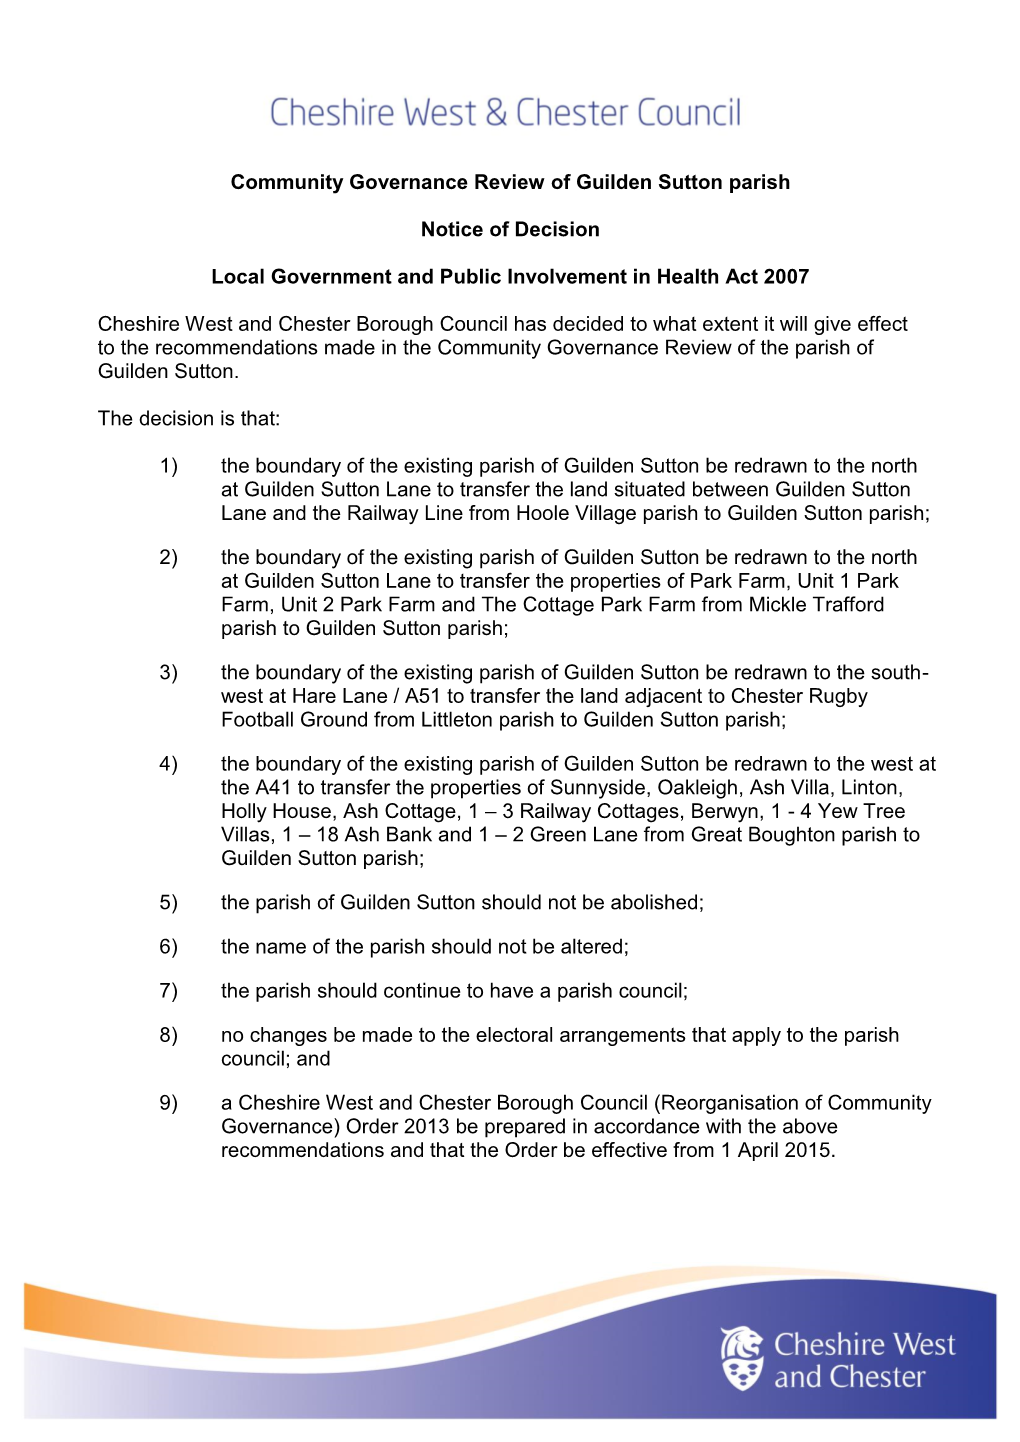 Community Governance Review of Guilden Sutton Parish